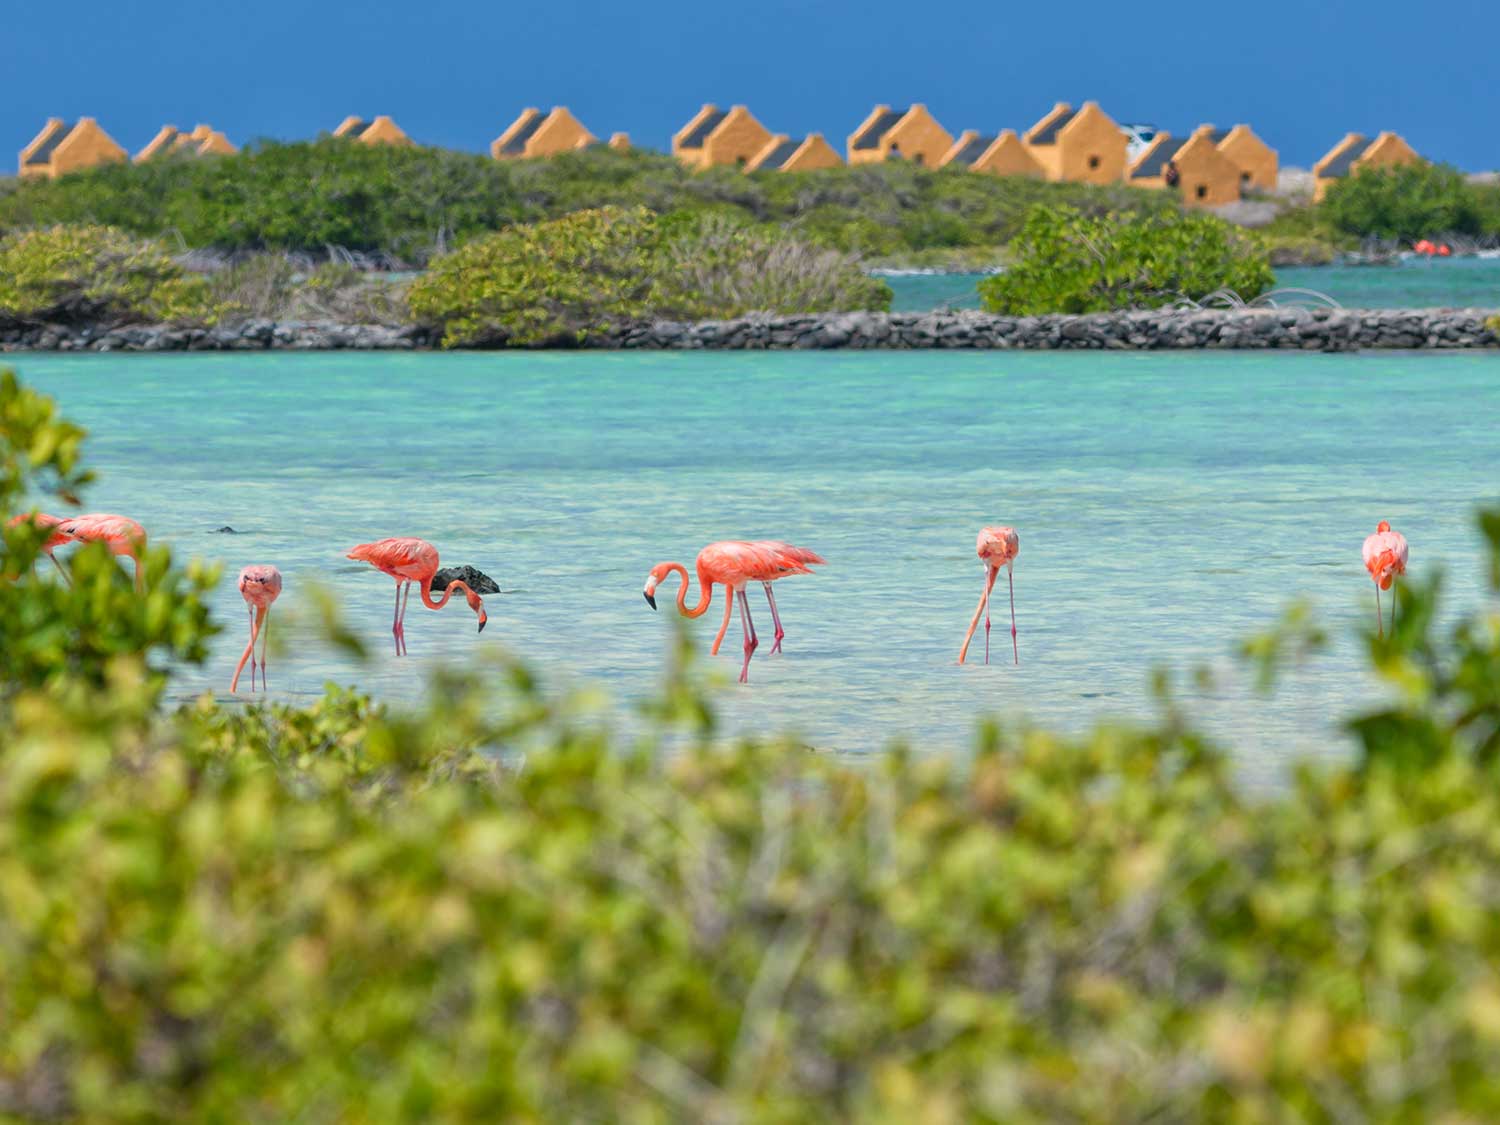 Flocks of flamingos standing in the waters of Bonaire.